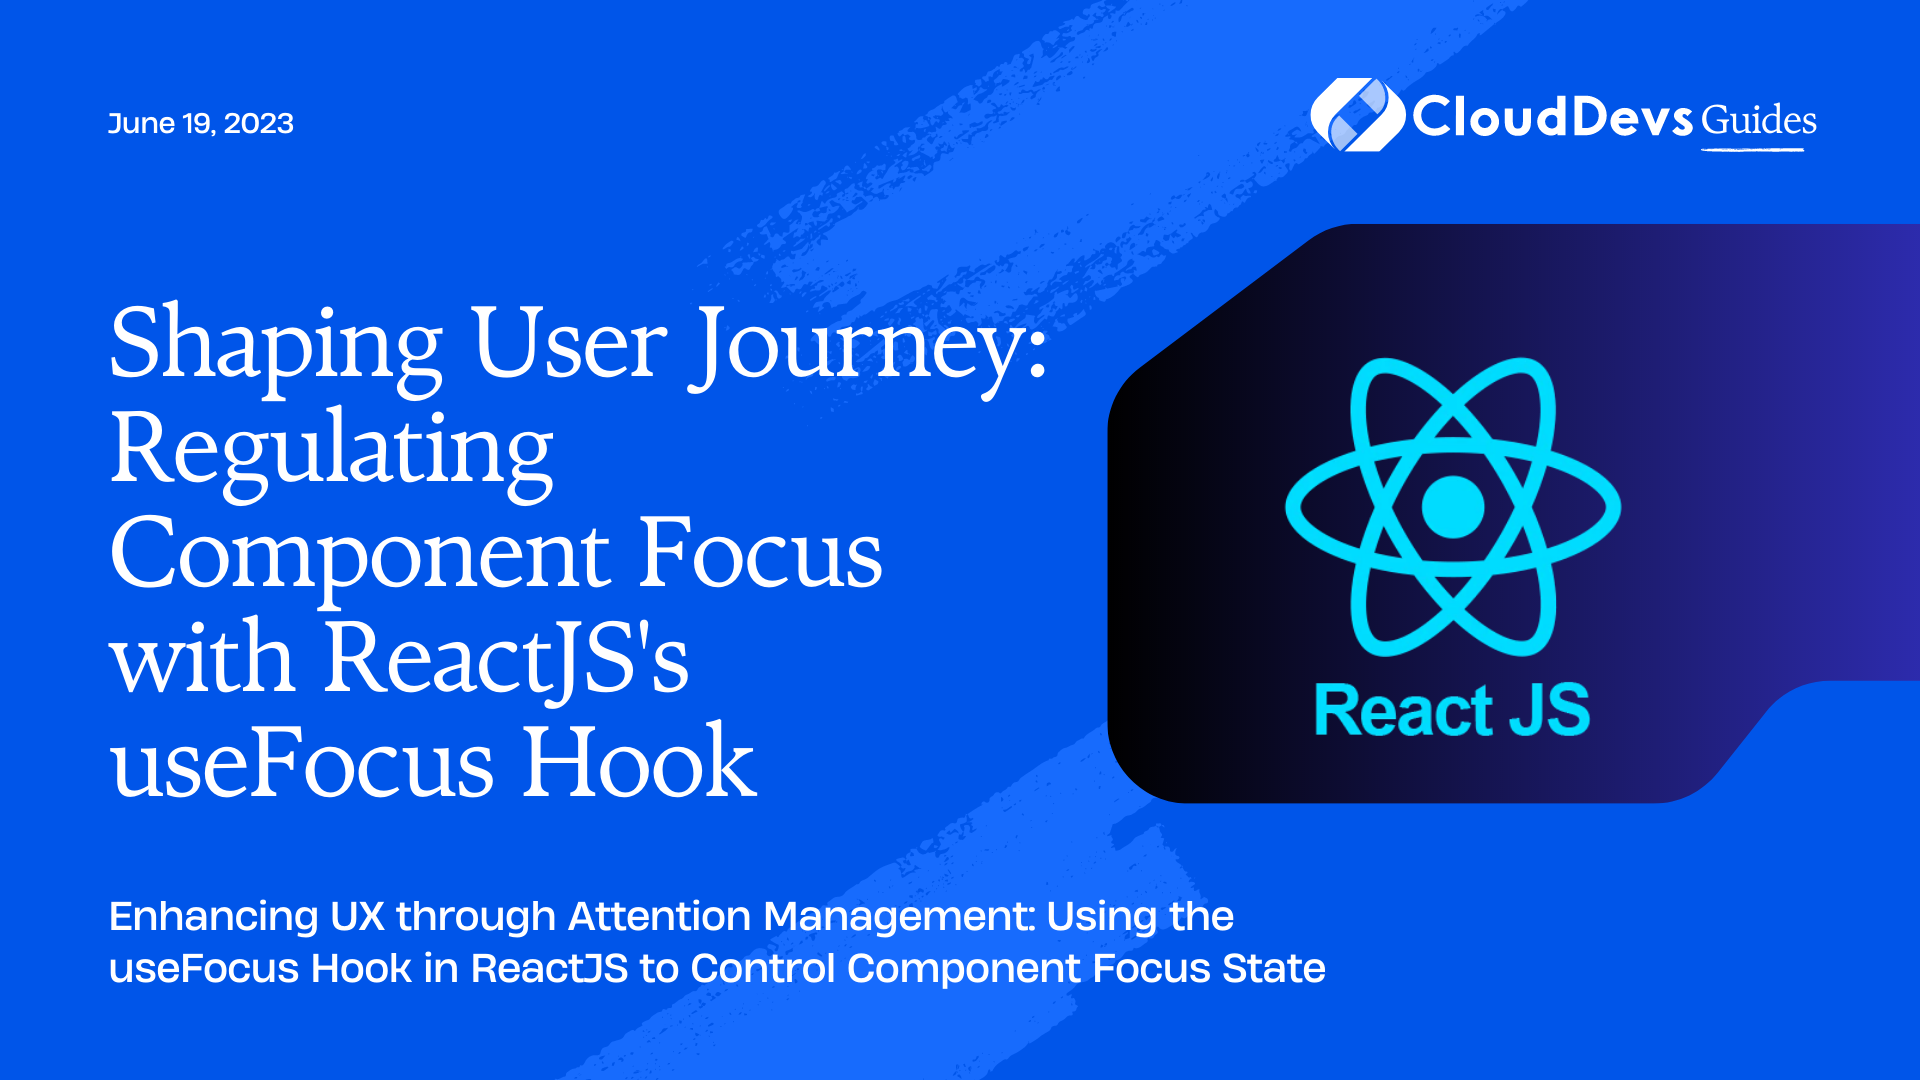 Shaping User Journey: Regulating Component Focus with ReactJS's useFocus Hook